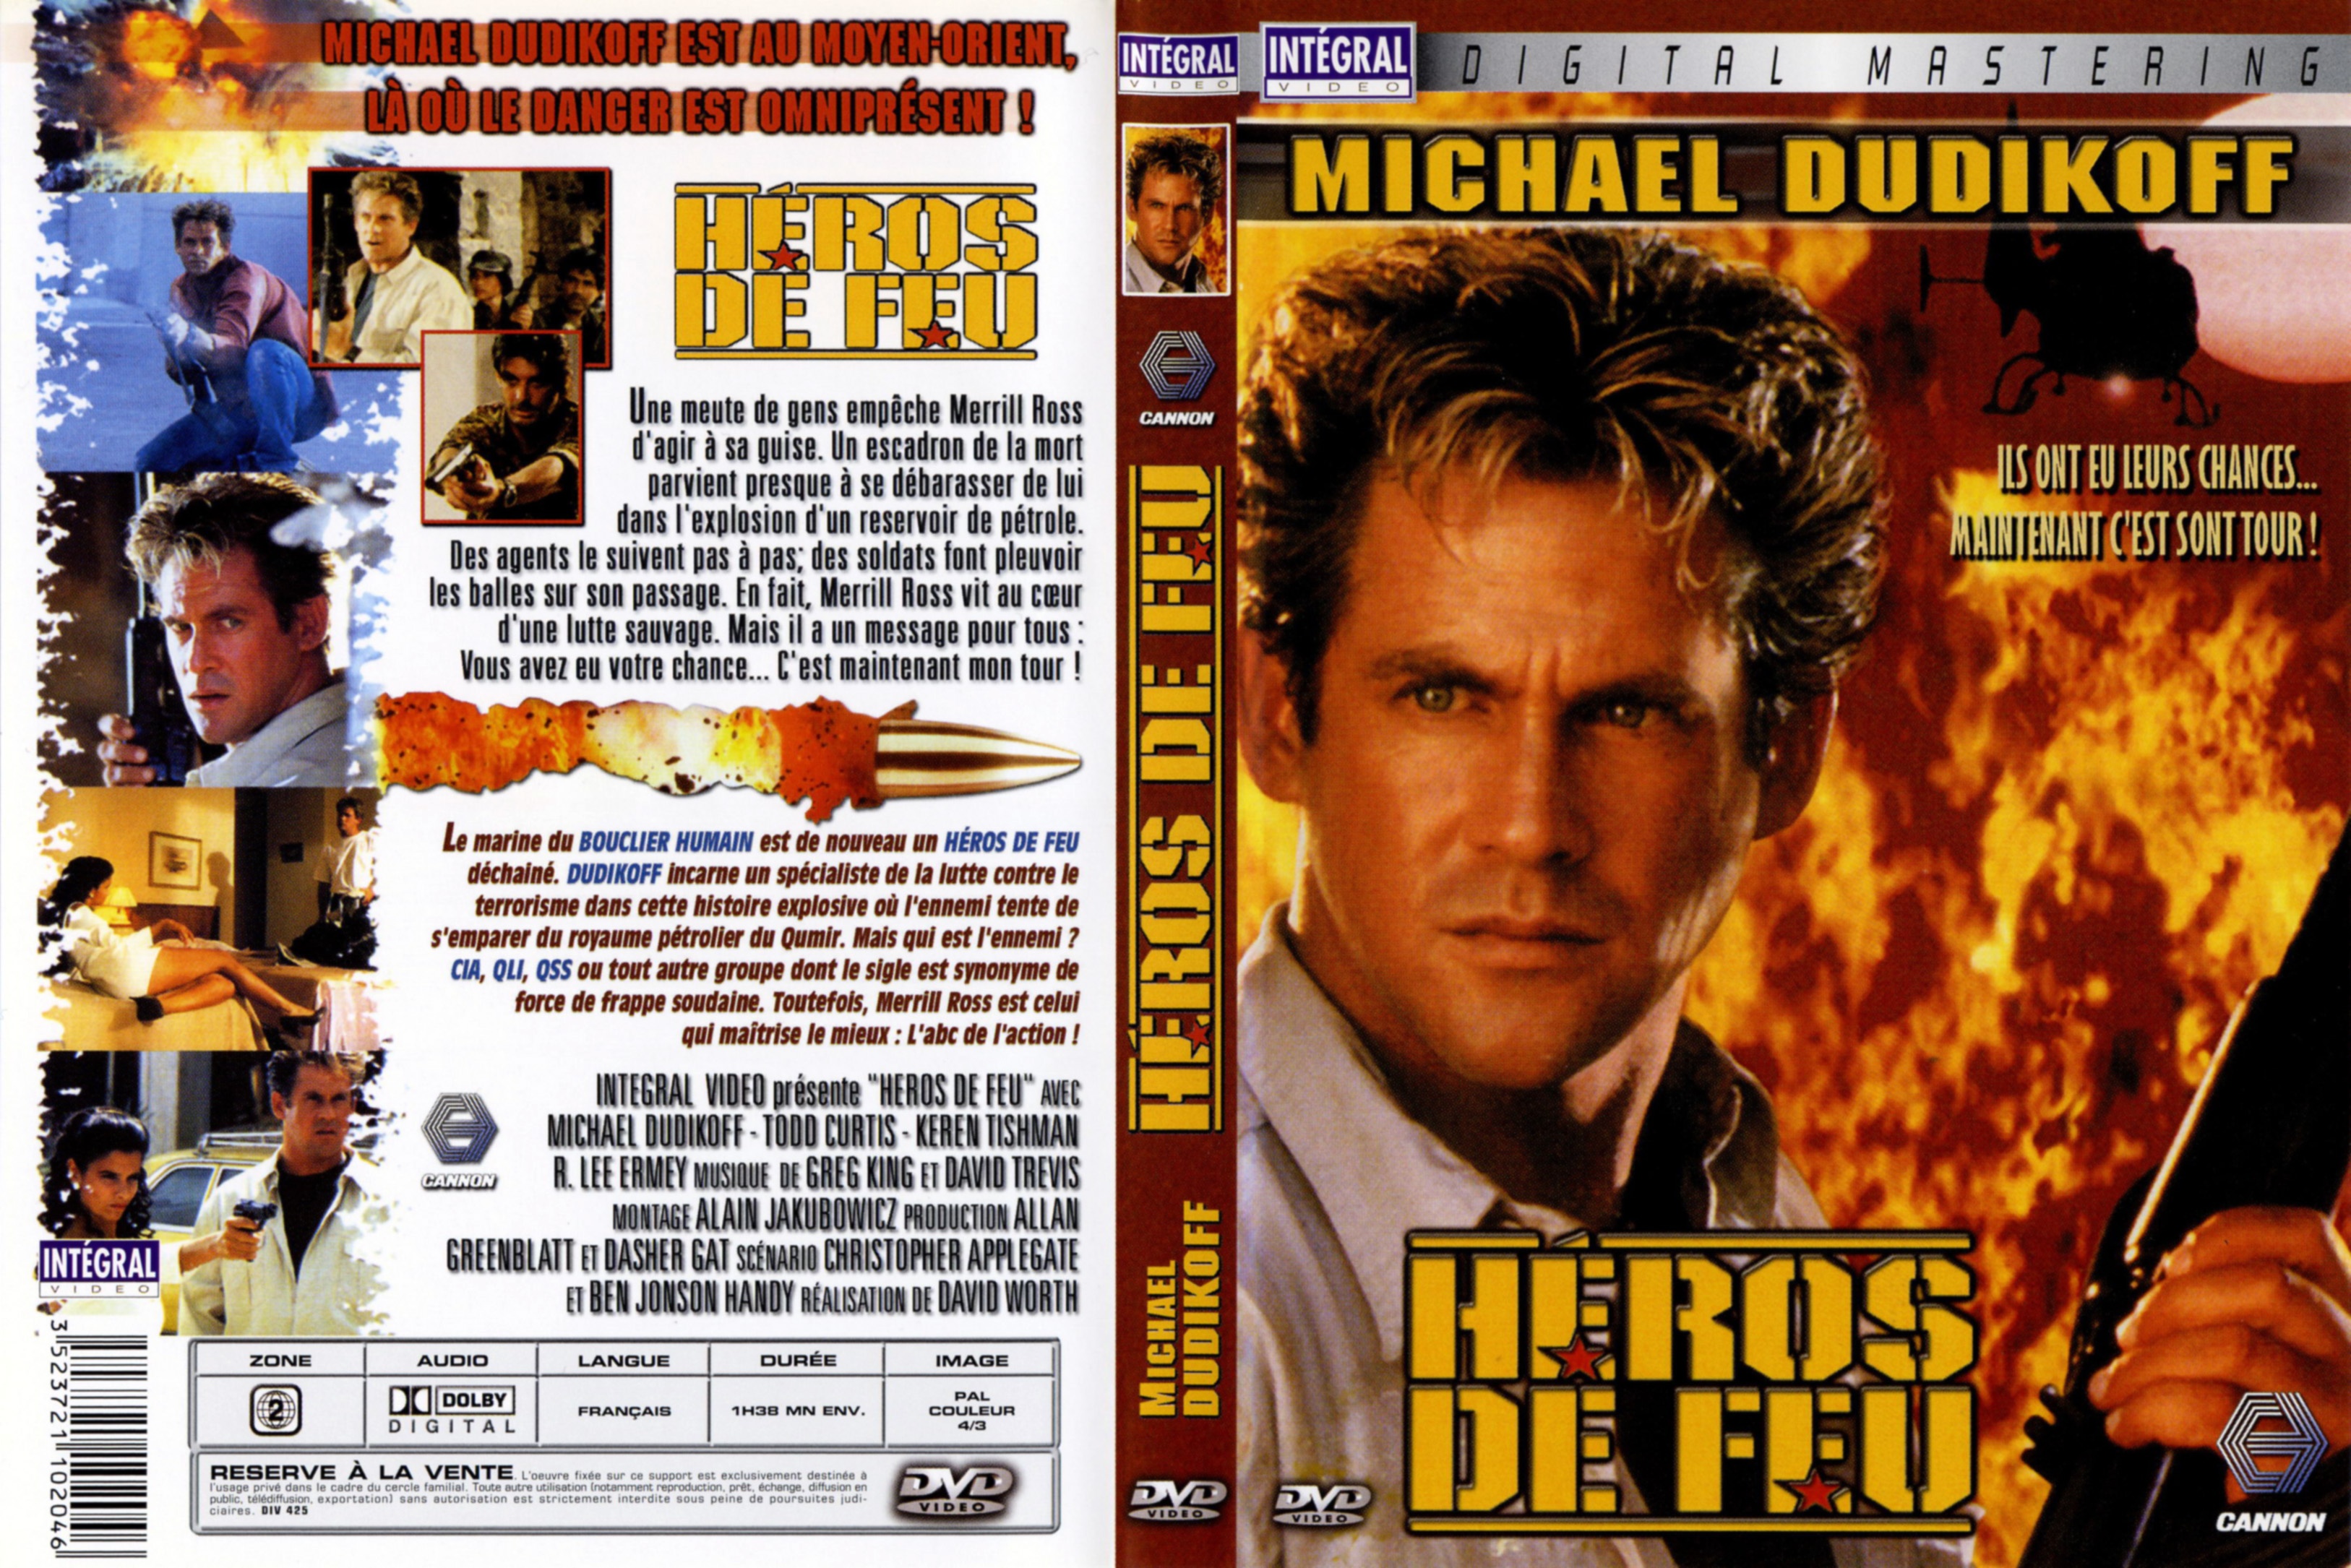 Jaquette DVD Heros de feu